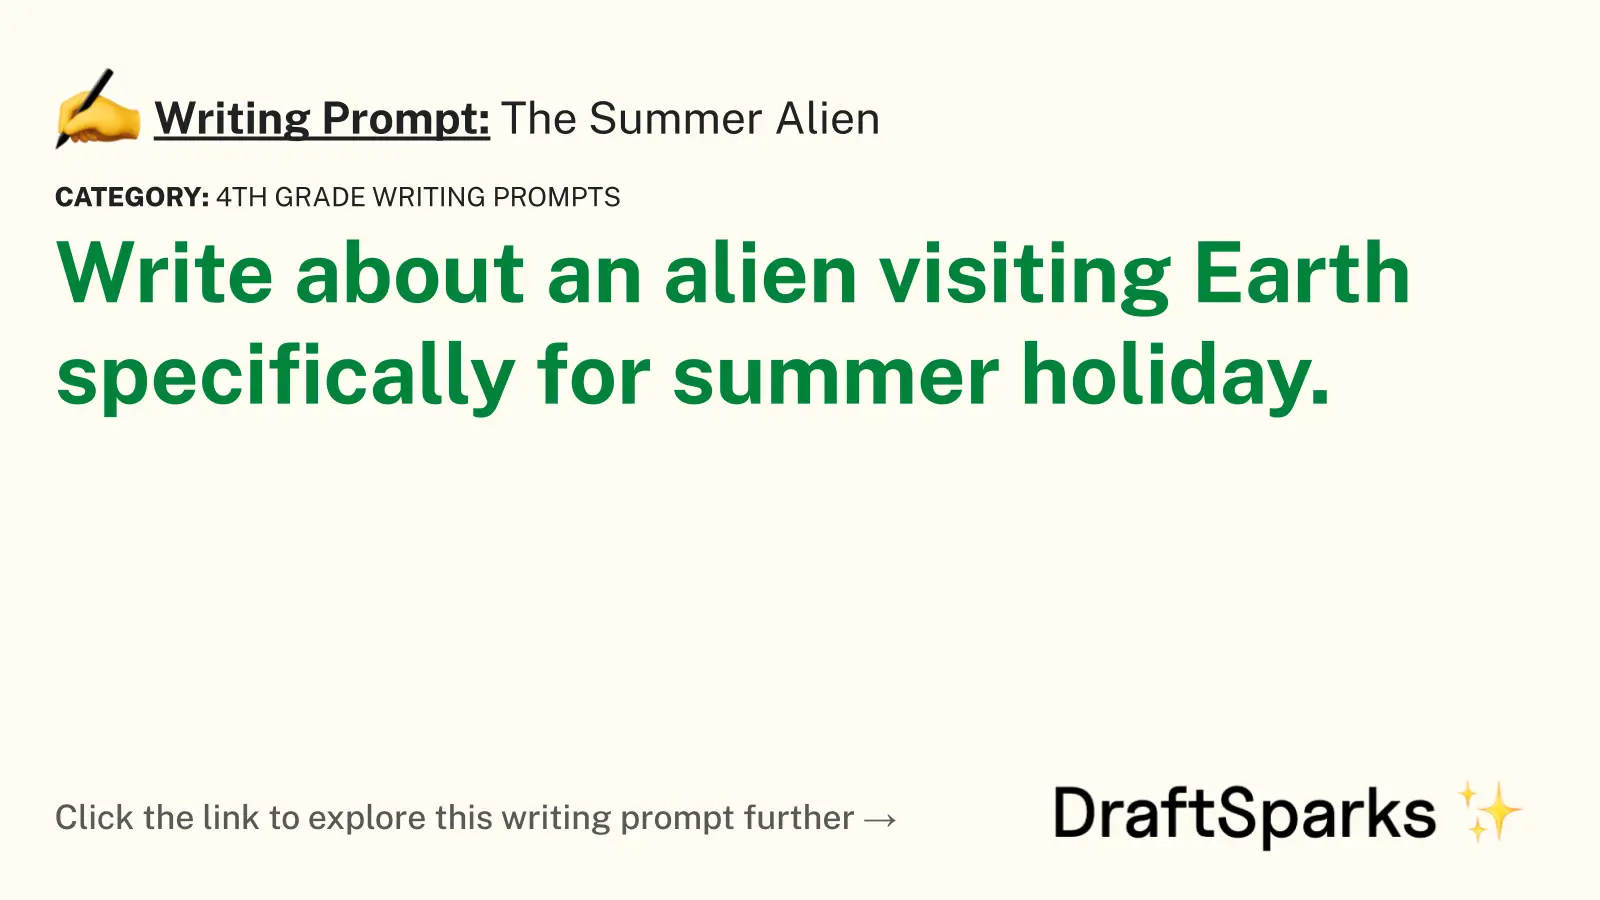 The Summer Alien